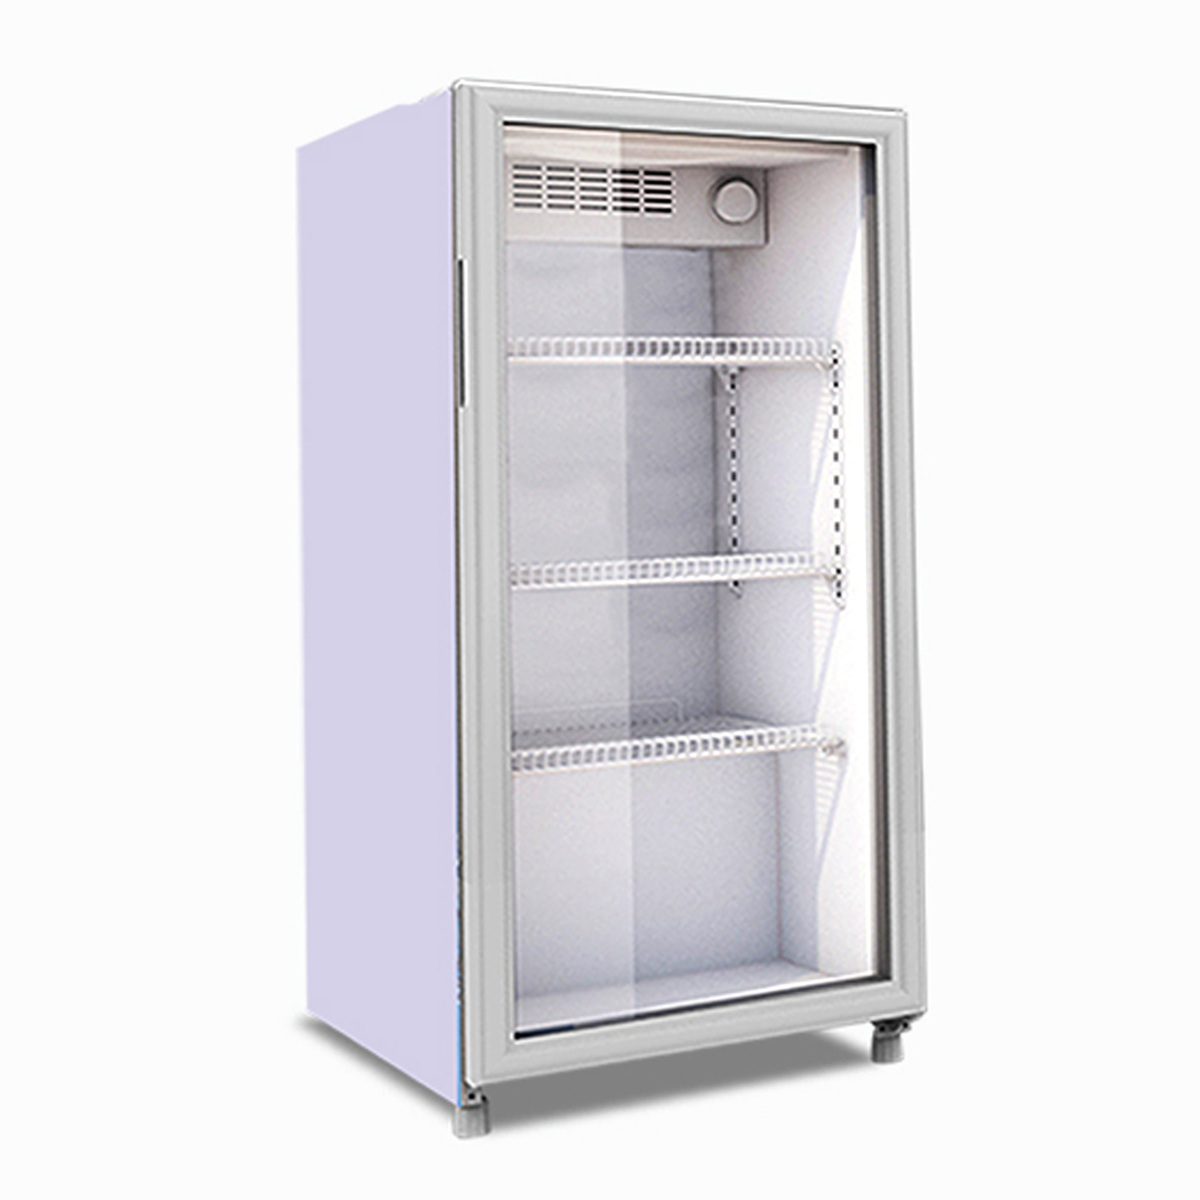 Generalco Single Door Refrigerator, 115 L, White, GSC115